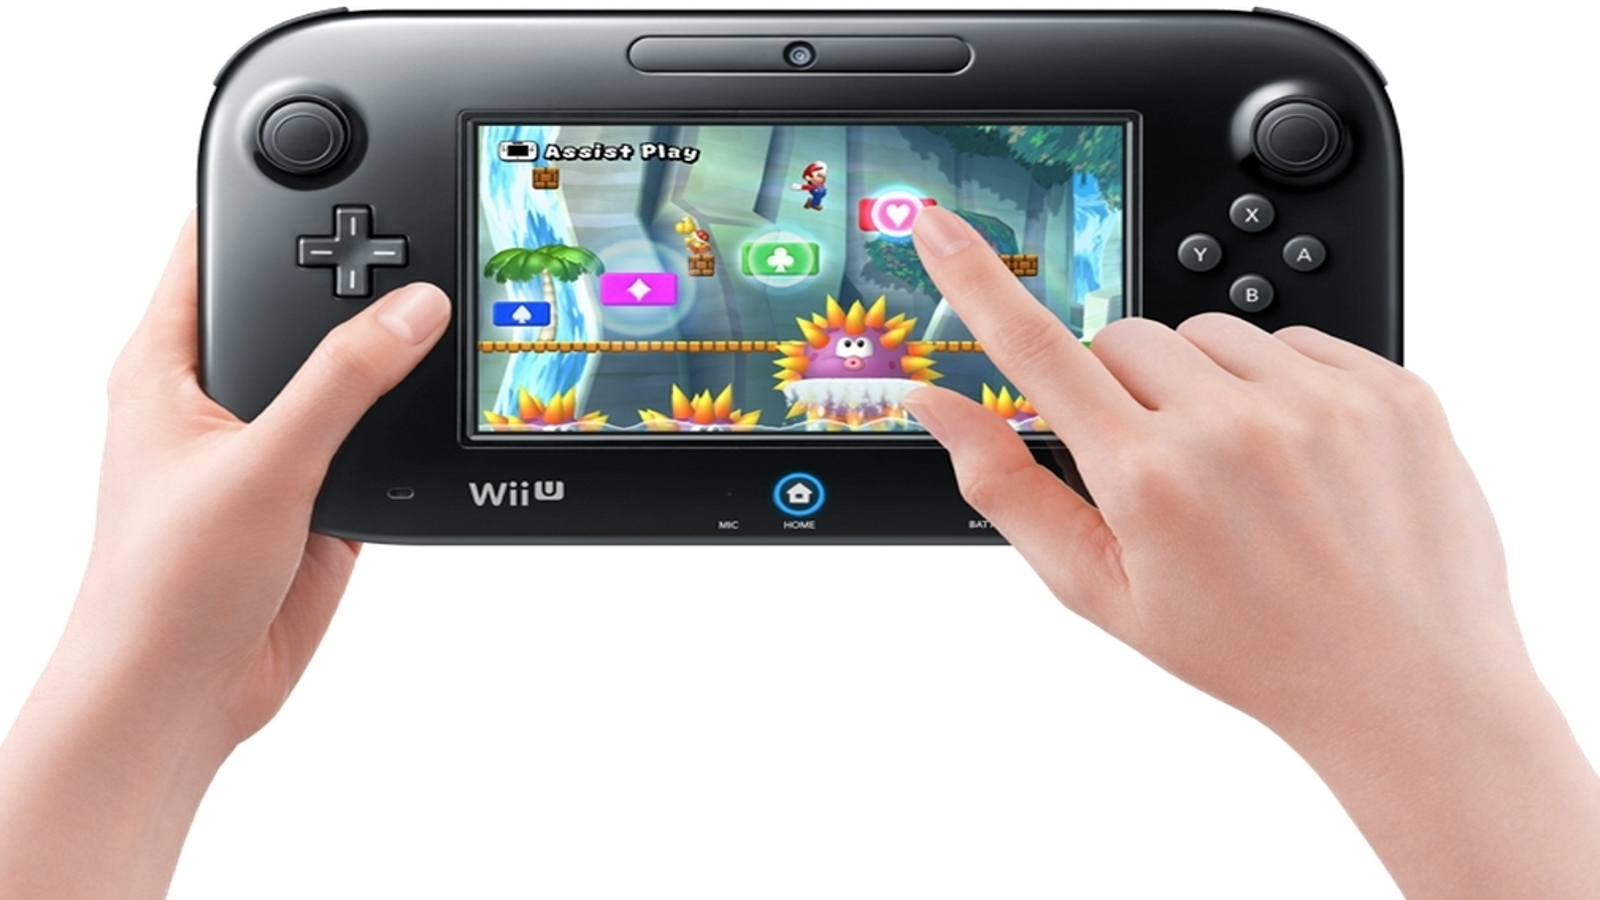 Nintendo Switch replaces Wii U on Nintendo homesite